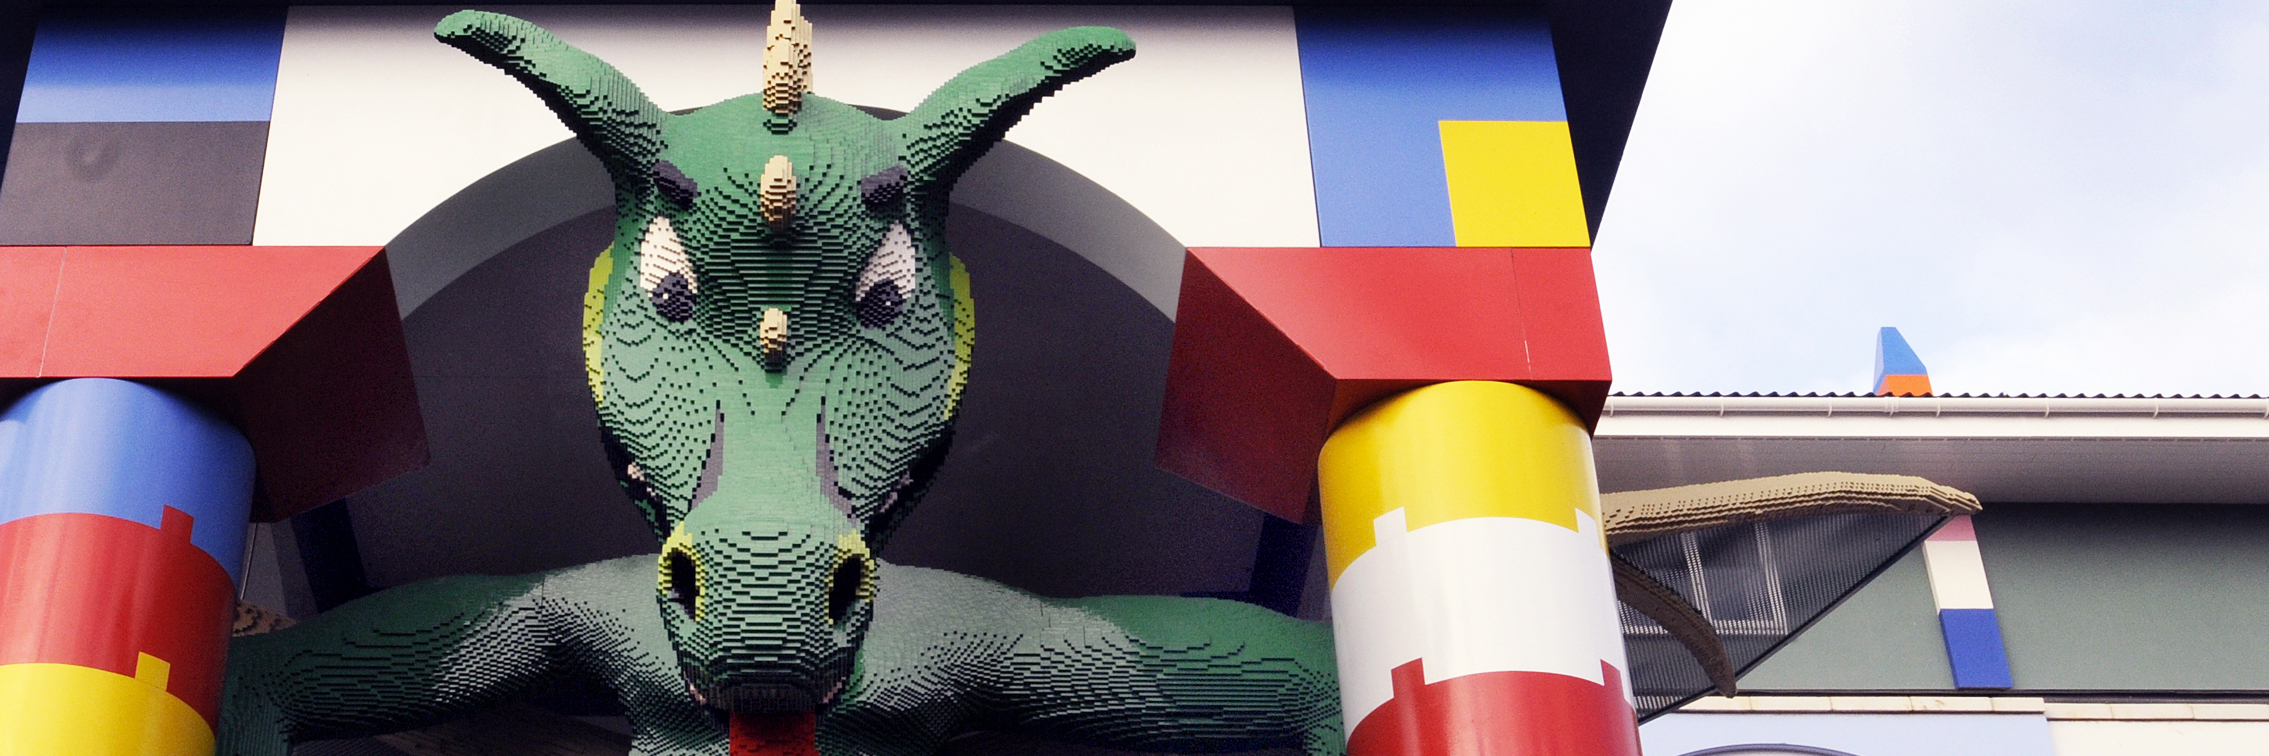 Legoland Windsor Resort Hotel Dragon